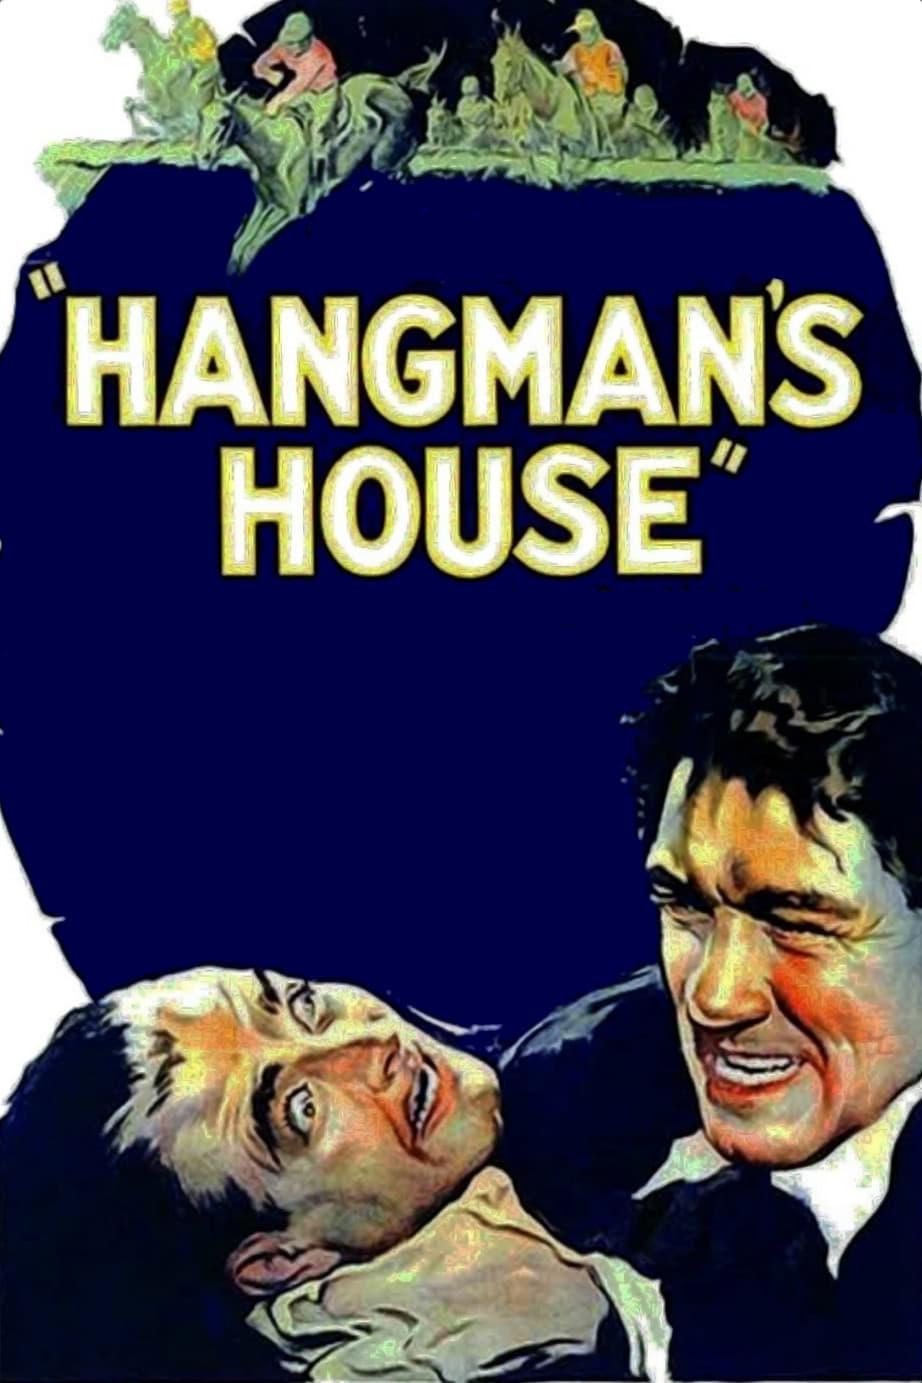 Hangman's House poster